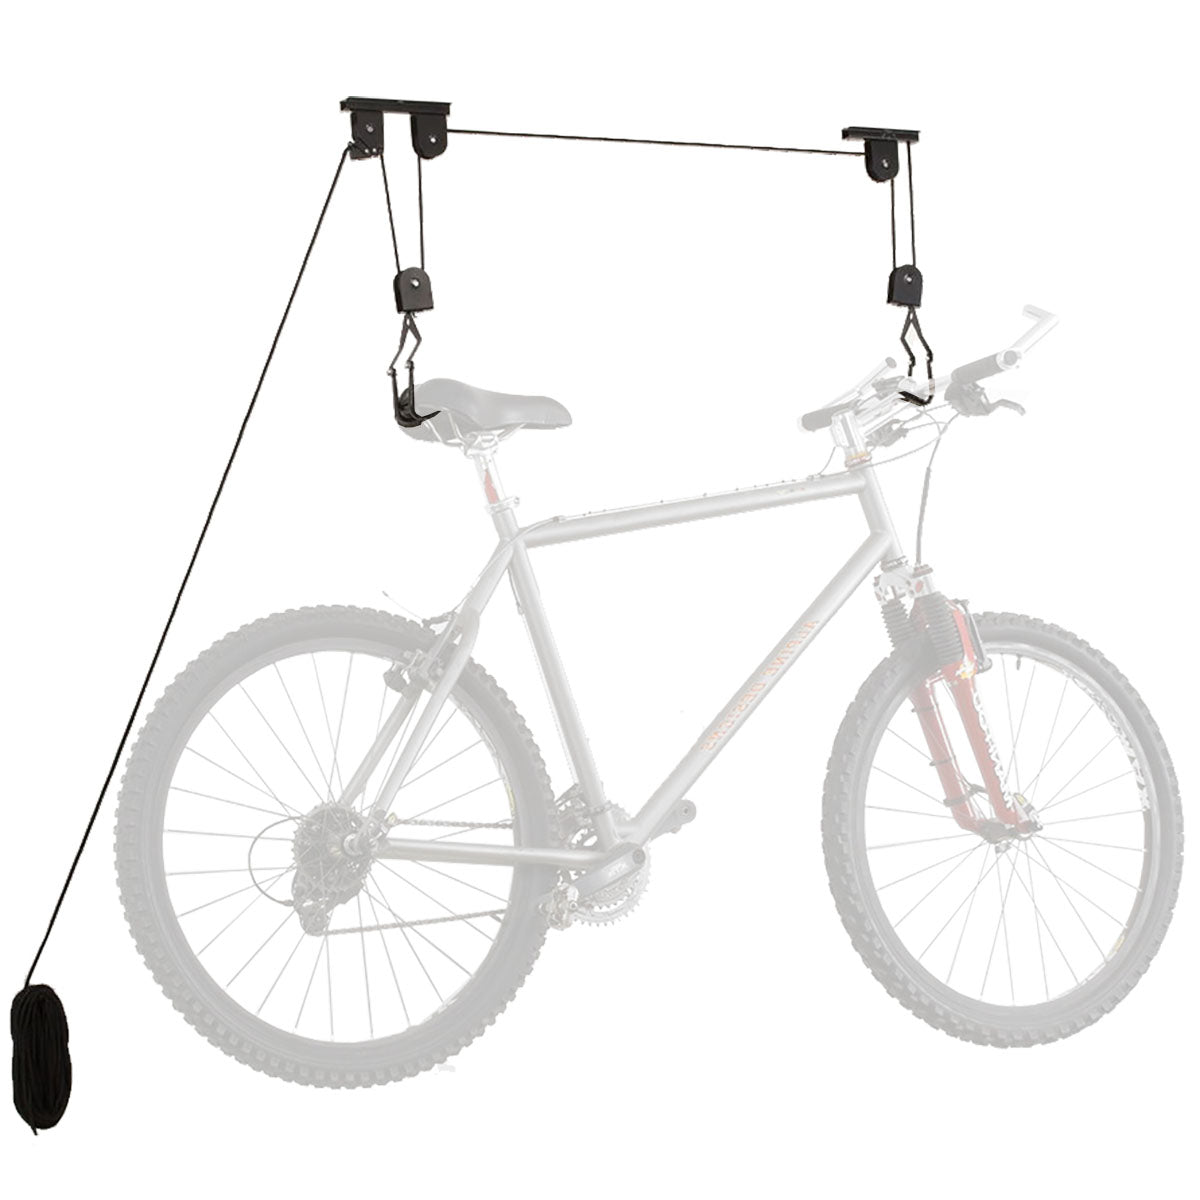 Bicycle Ceiling Hanging Storage